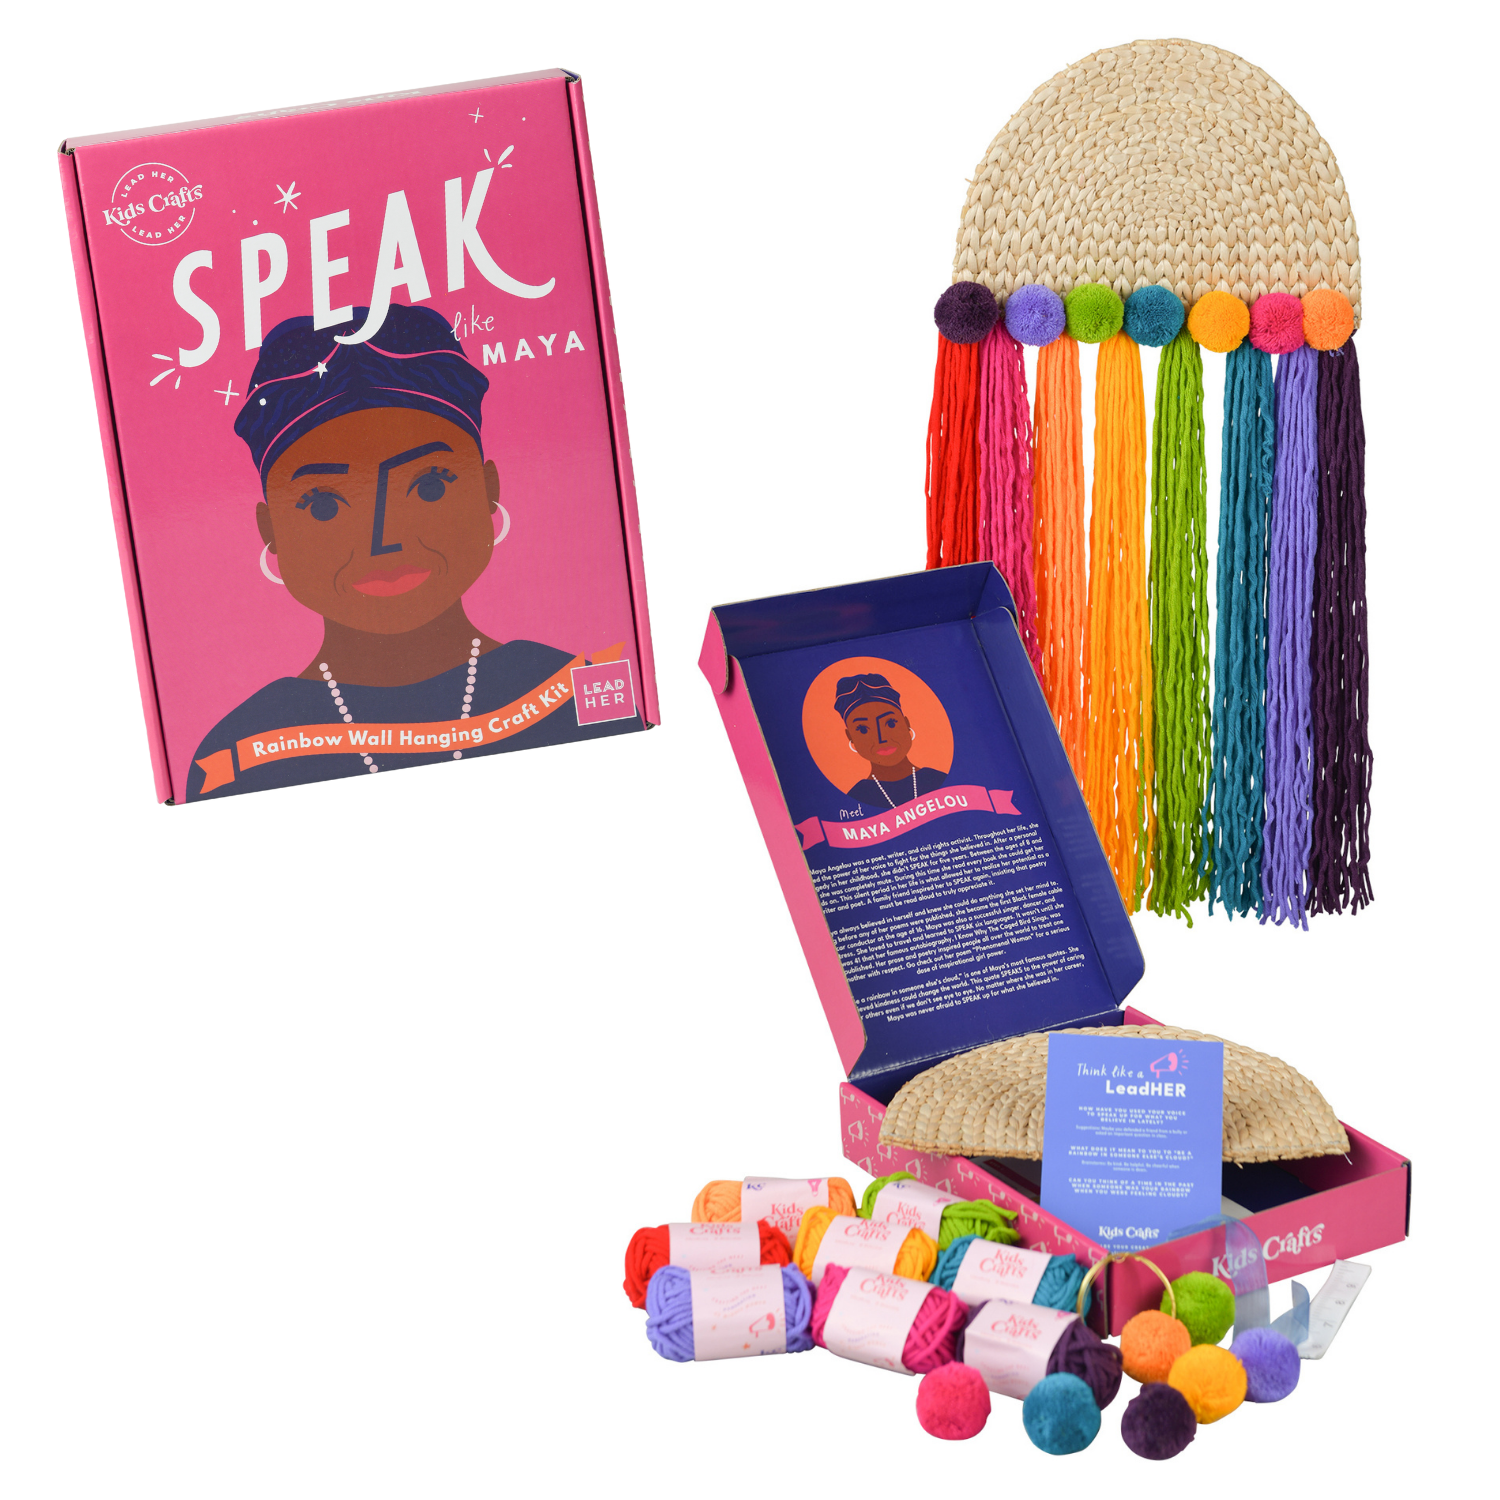 SPEAK like Maya: Rainbow Wall Hanging Craft kit